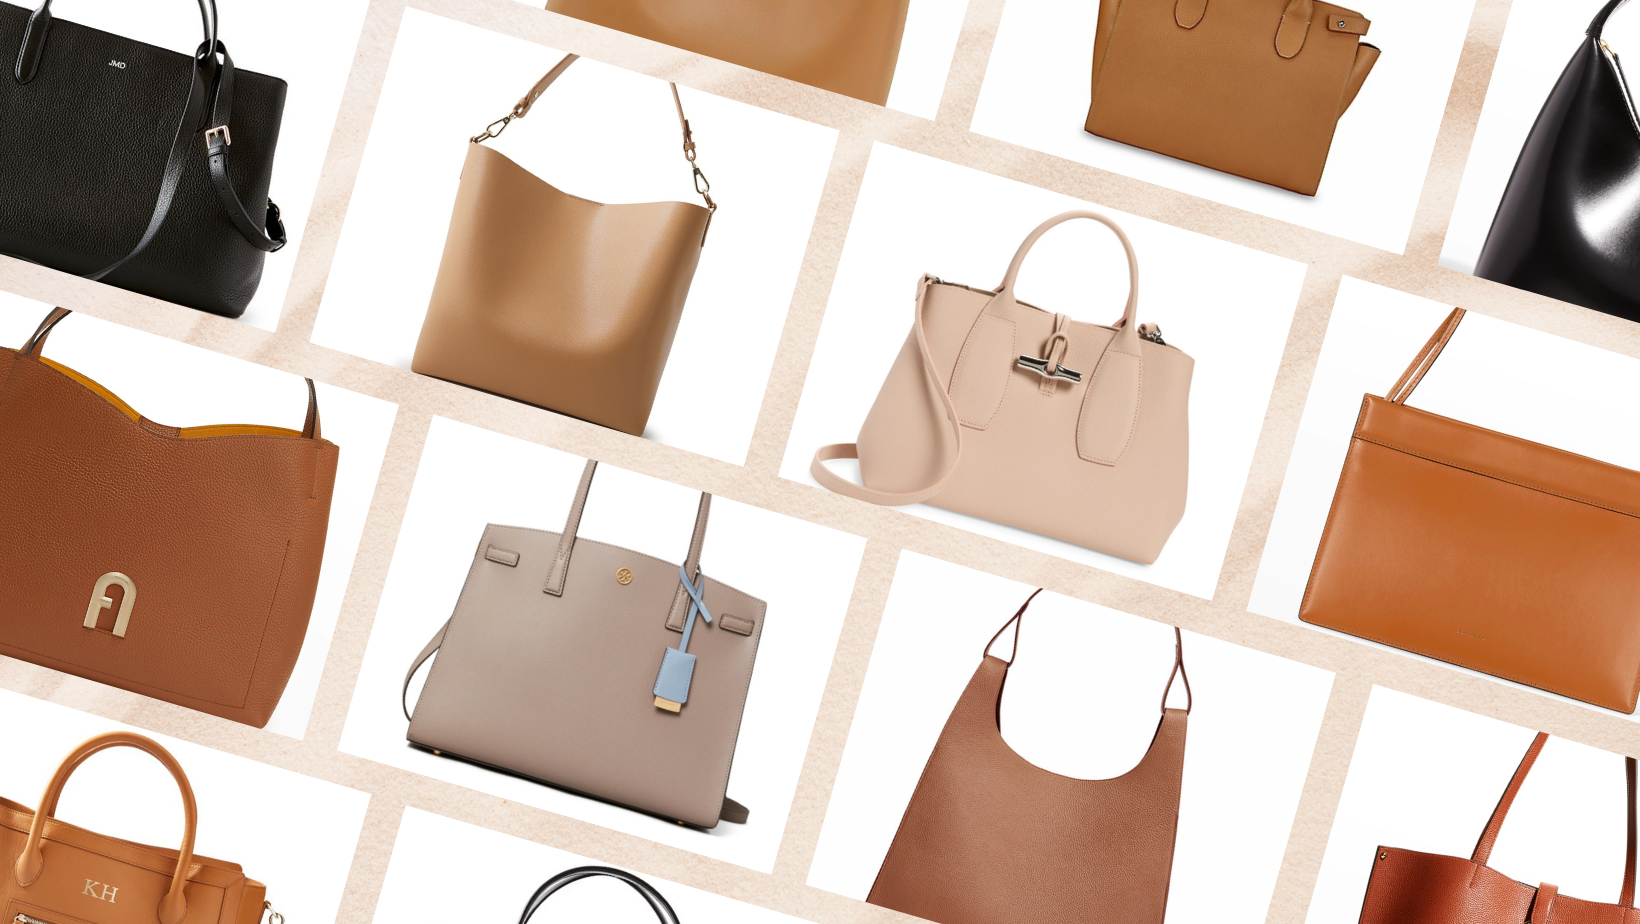 Designer Tote Bags, Canvas & Italian Leather